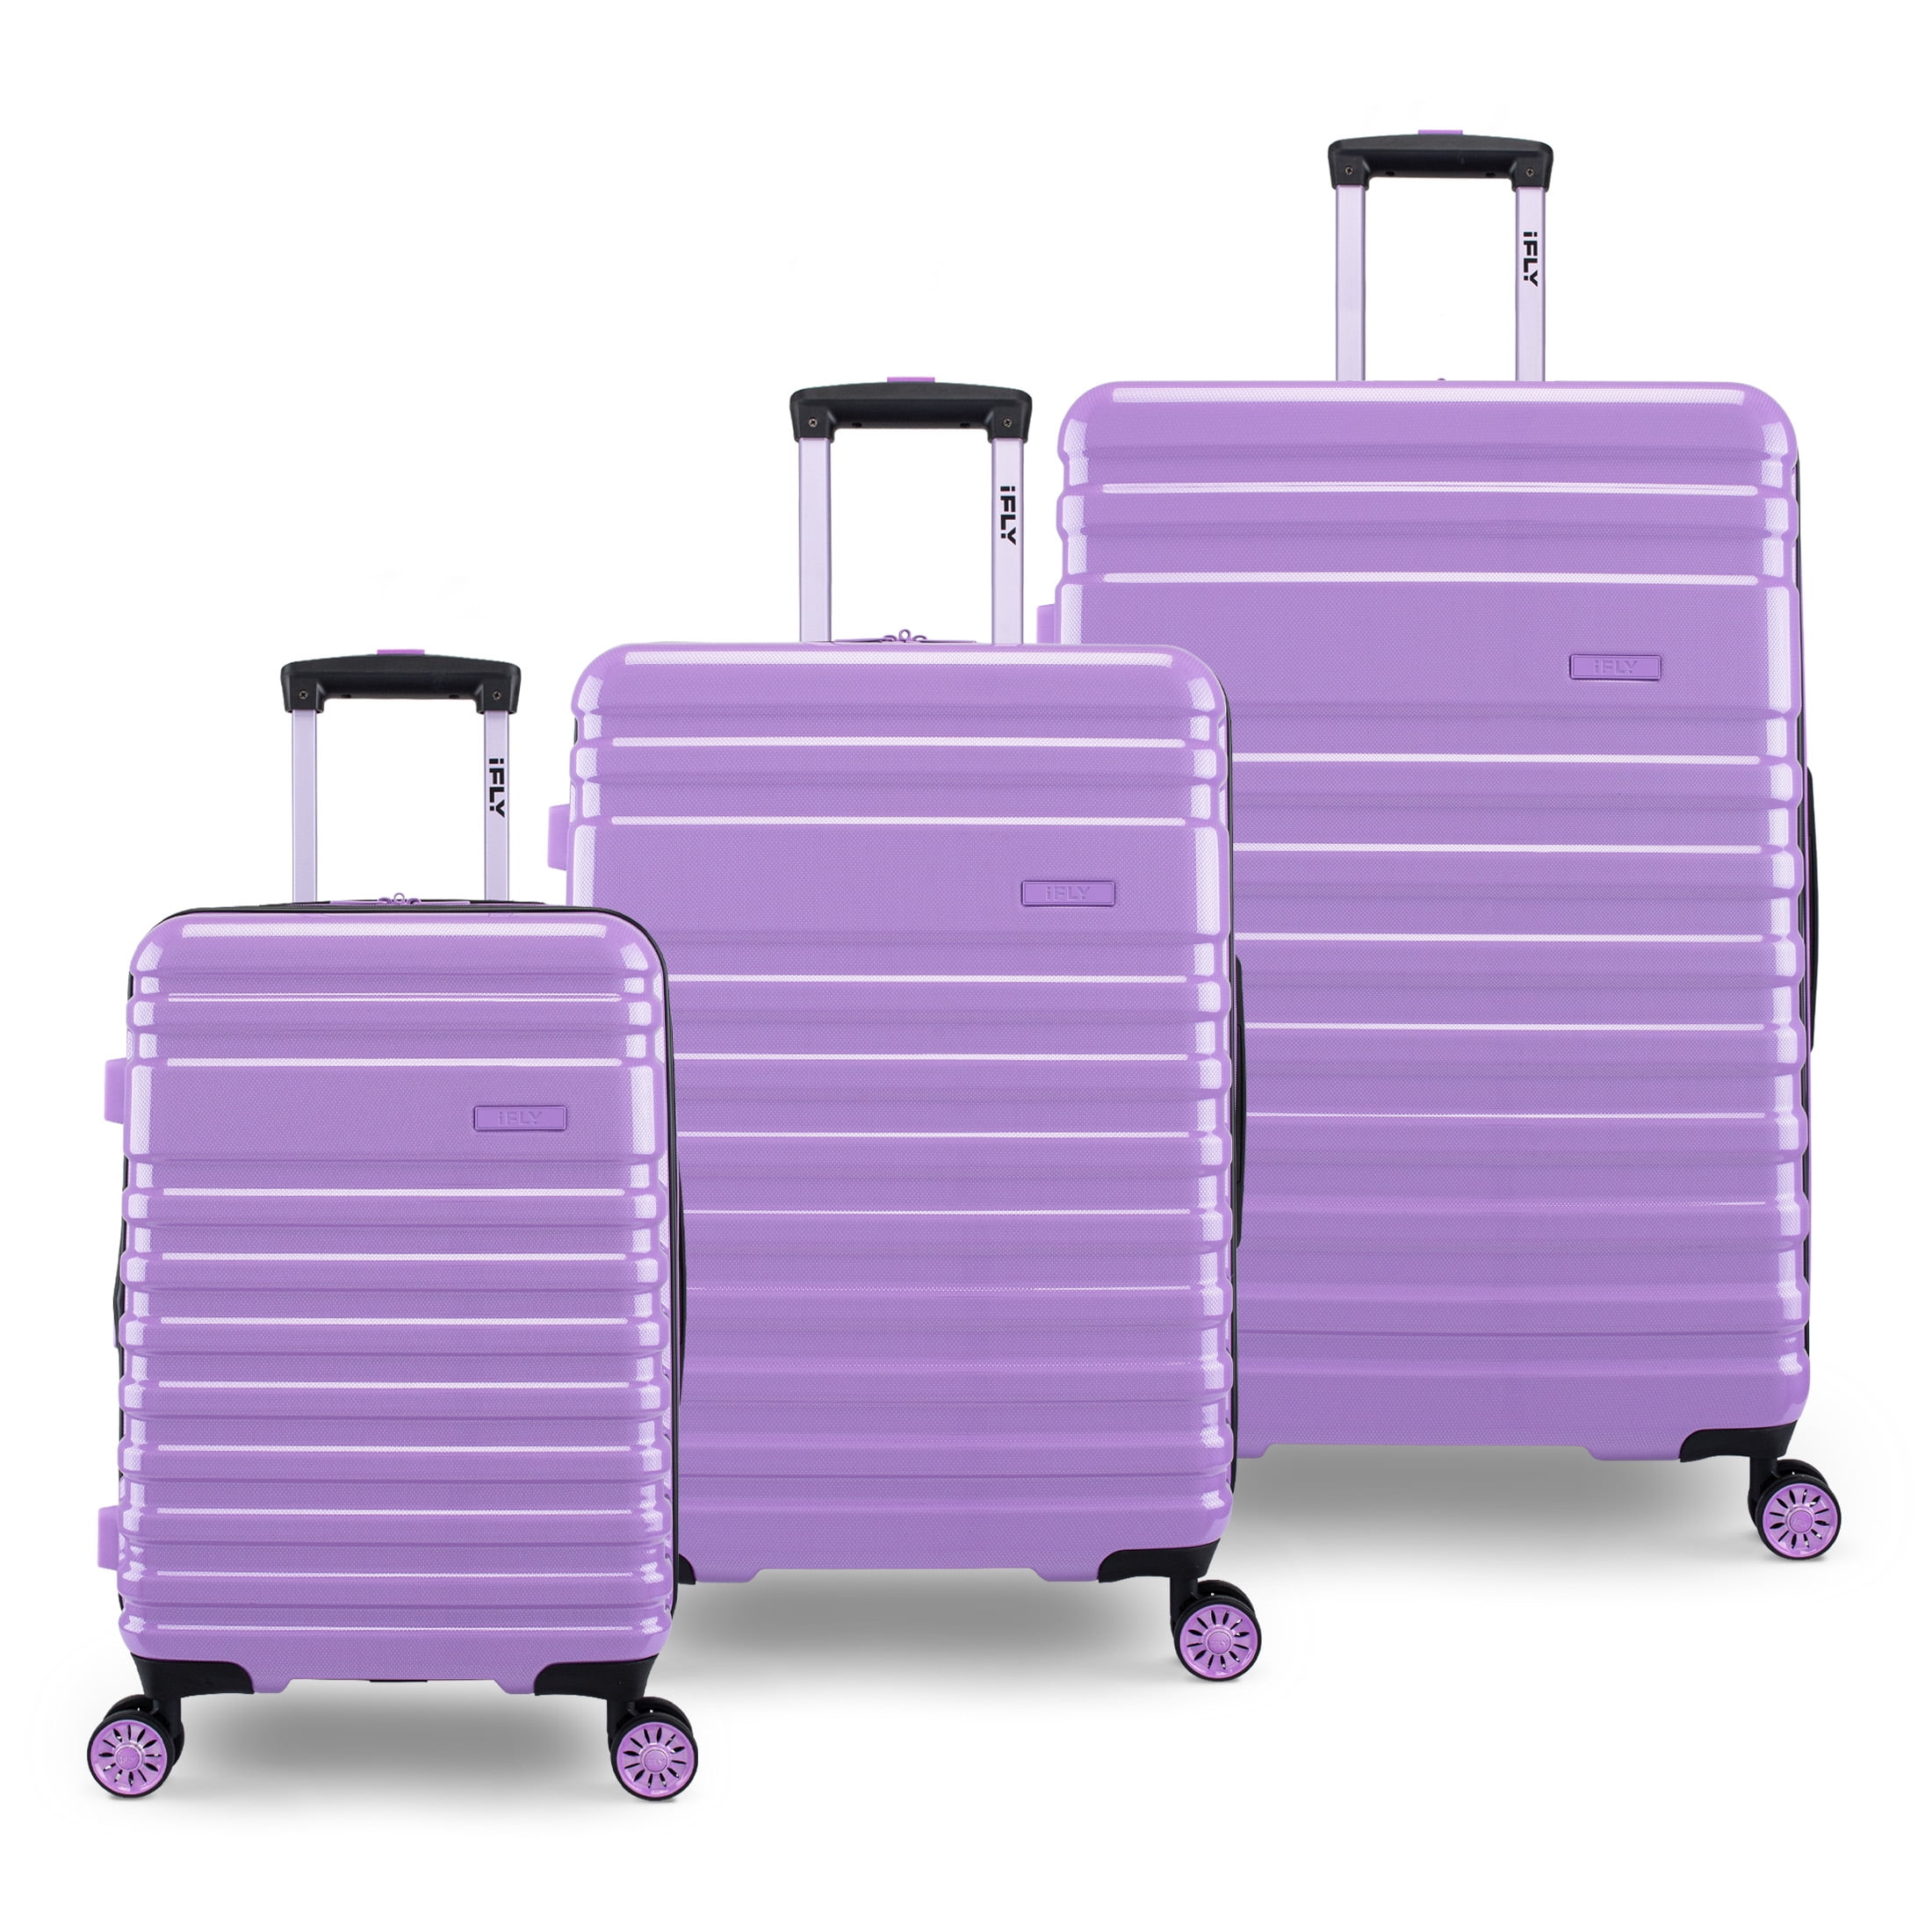 iFLY Hardside Luggage Spectre Versus 3 Piece Set, 20